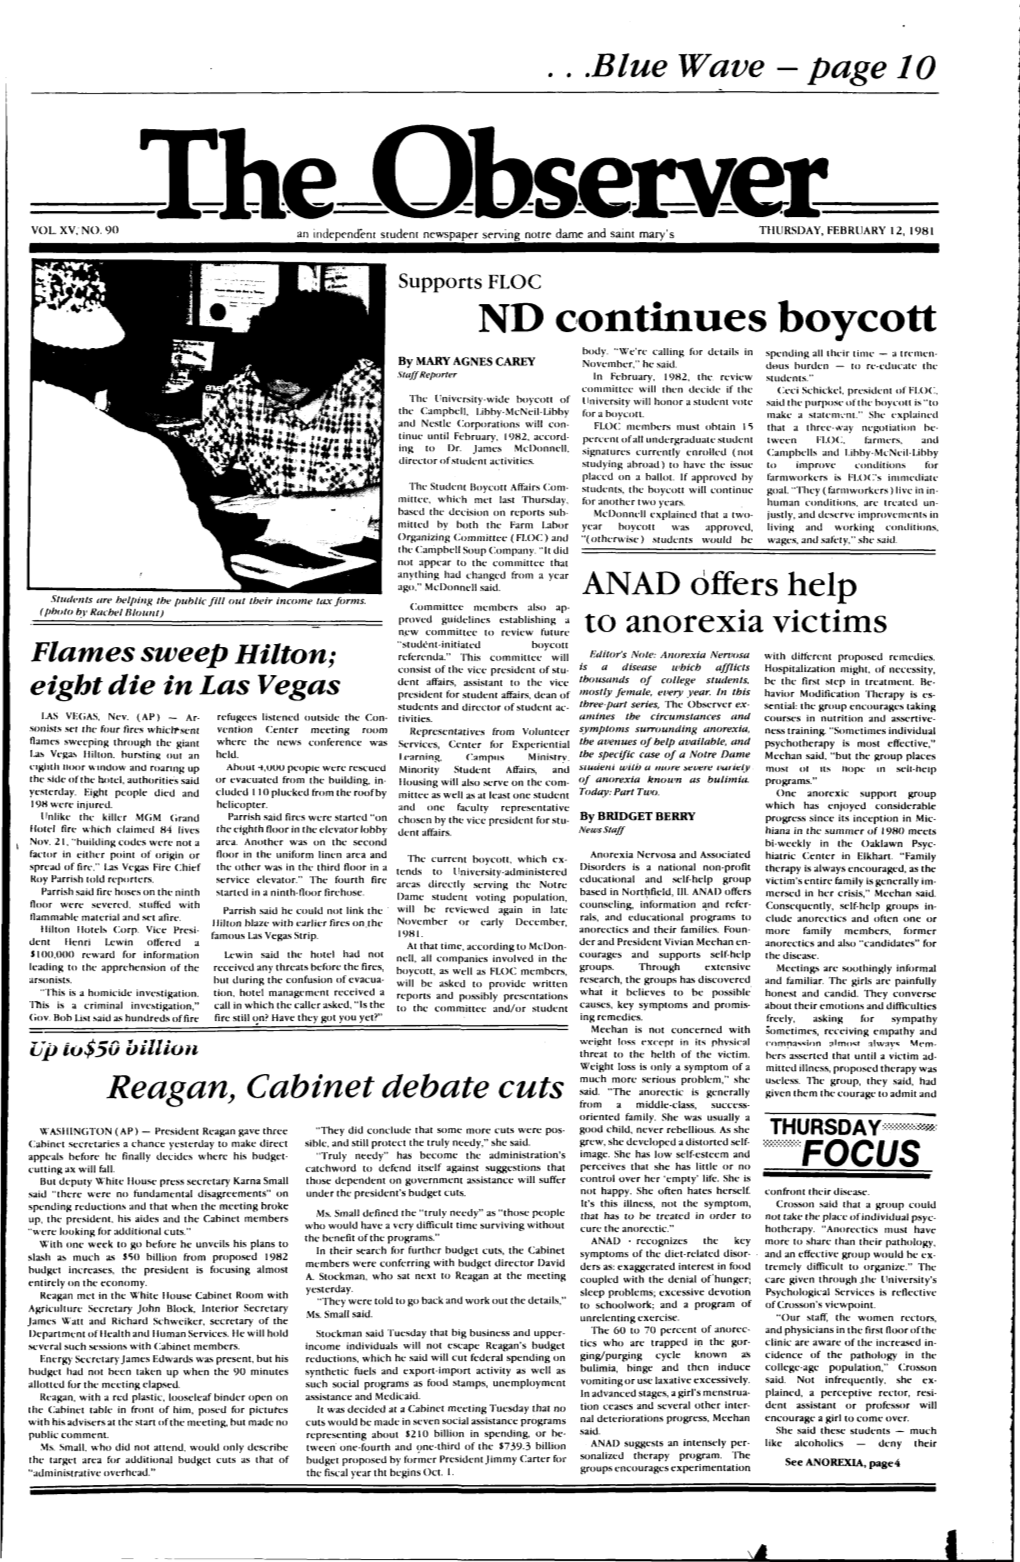 ND Continues Boycott Body